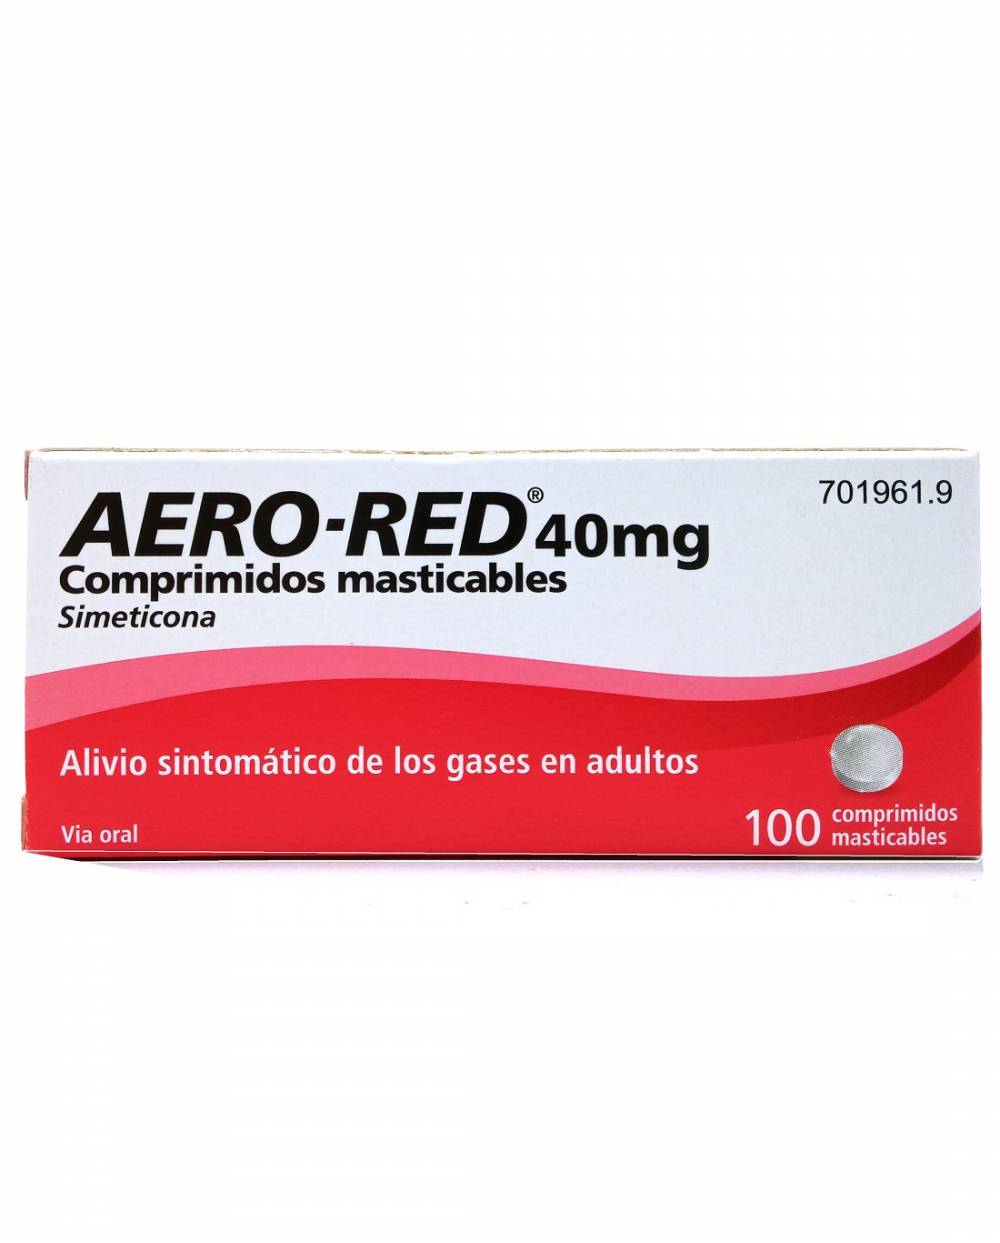 Aero-red - 40 mg - 100 comprimidos masticables